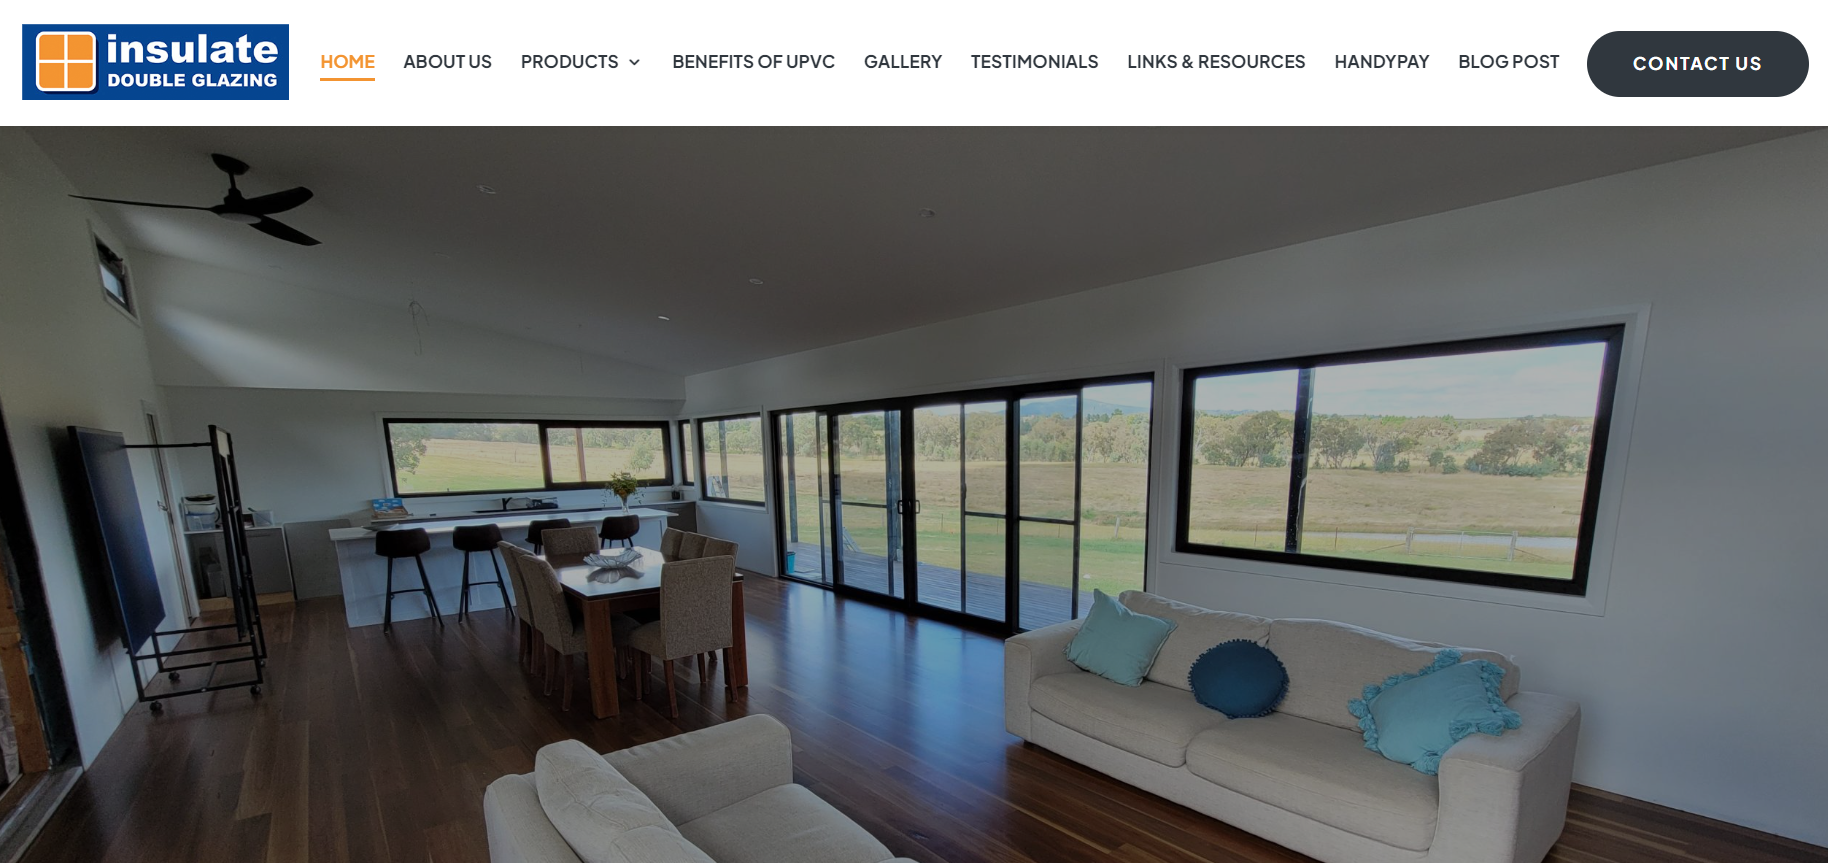 Insulate Double Glazing - new website design and development